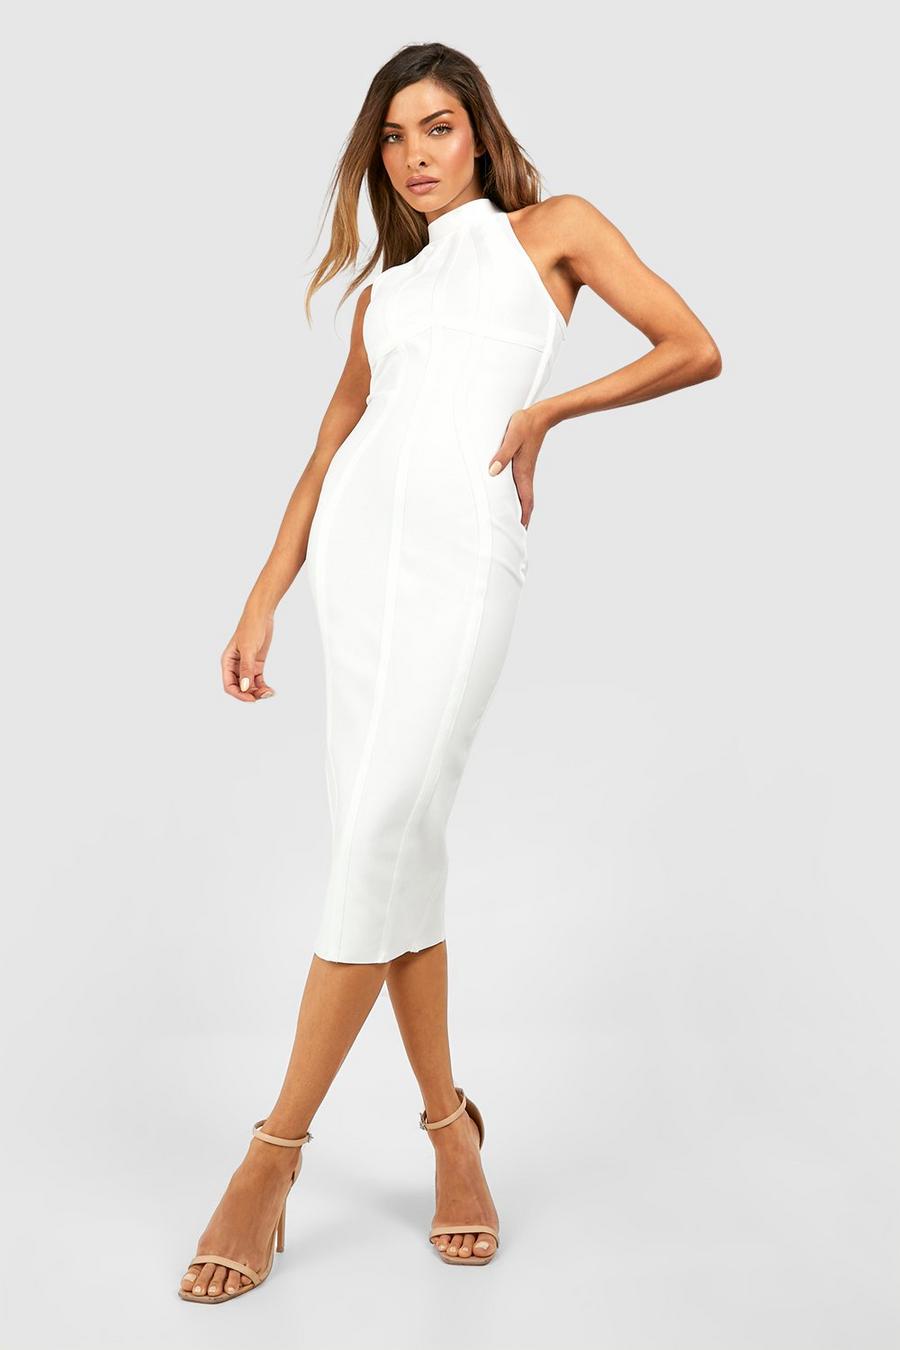 White שמלת מידי בנדג' עם צווארון גבוה image number 1